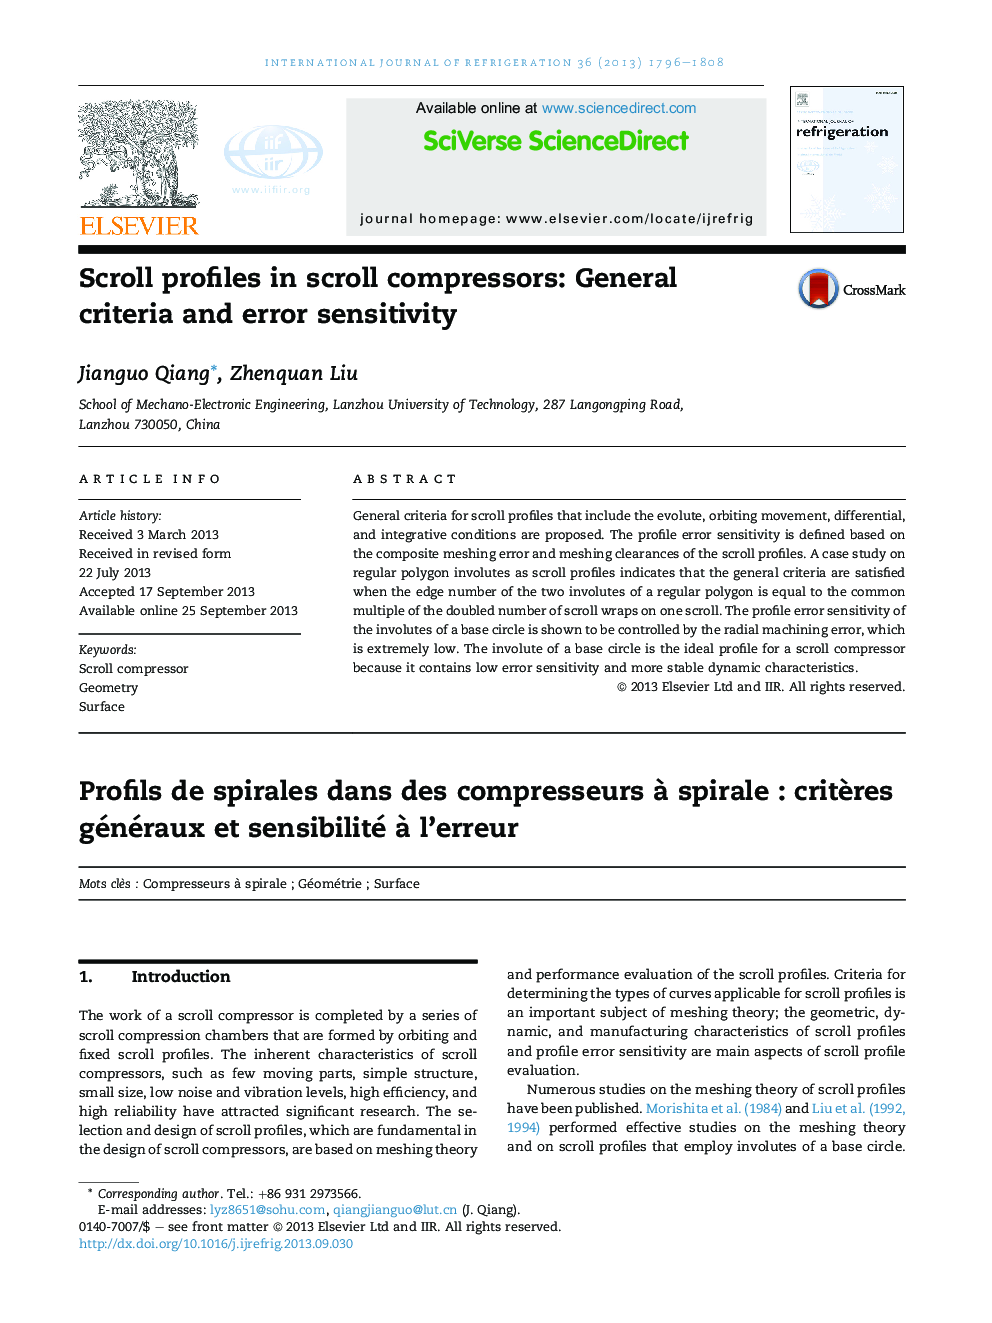 Scroll profiles in scroll compressors: General criteria and error sensitivity